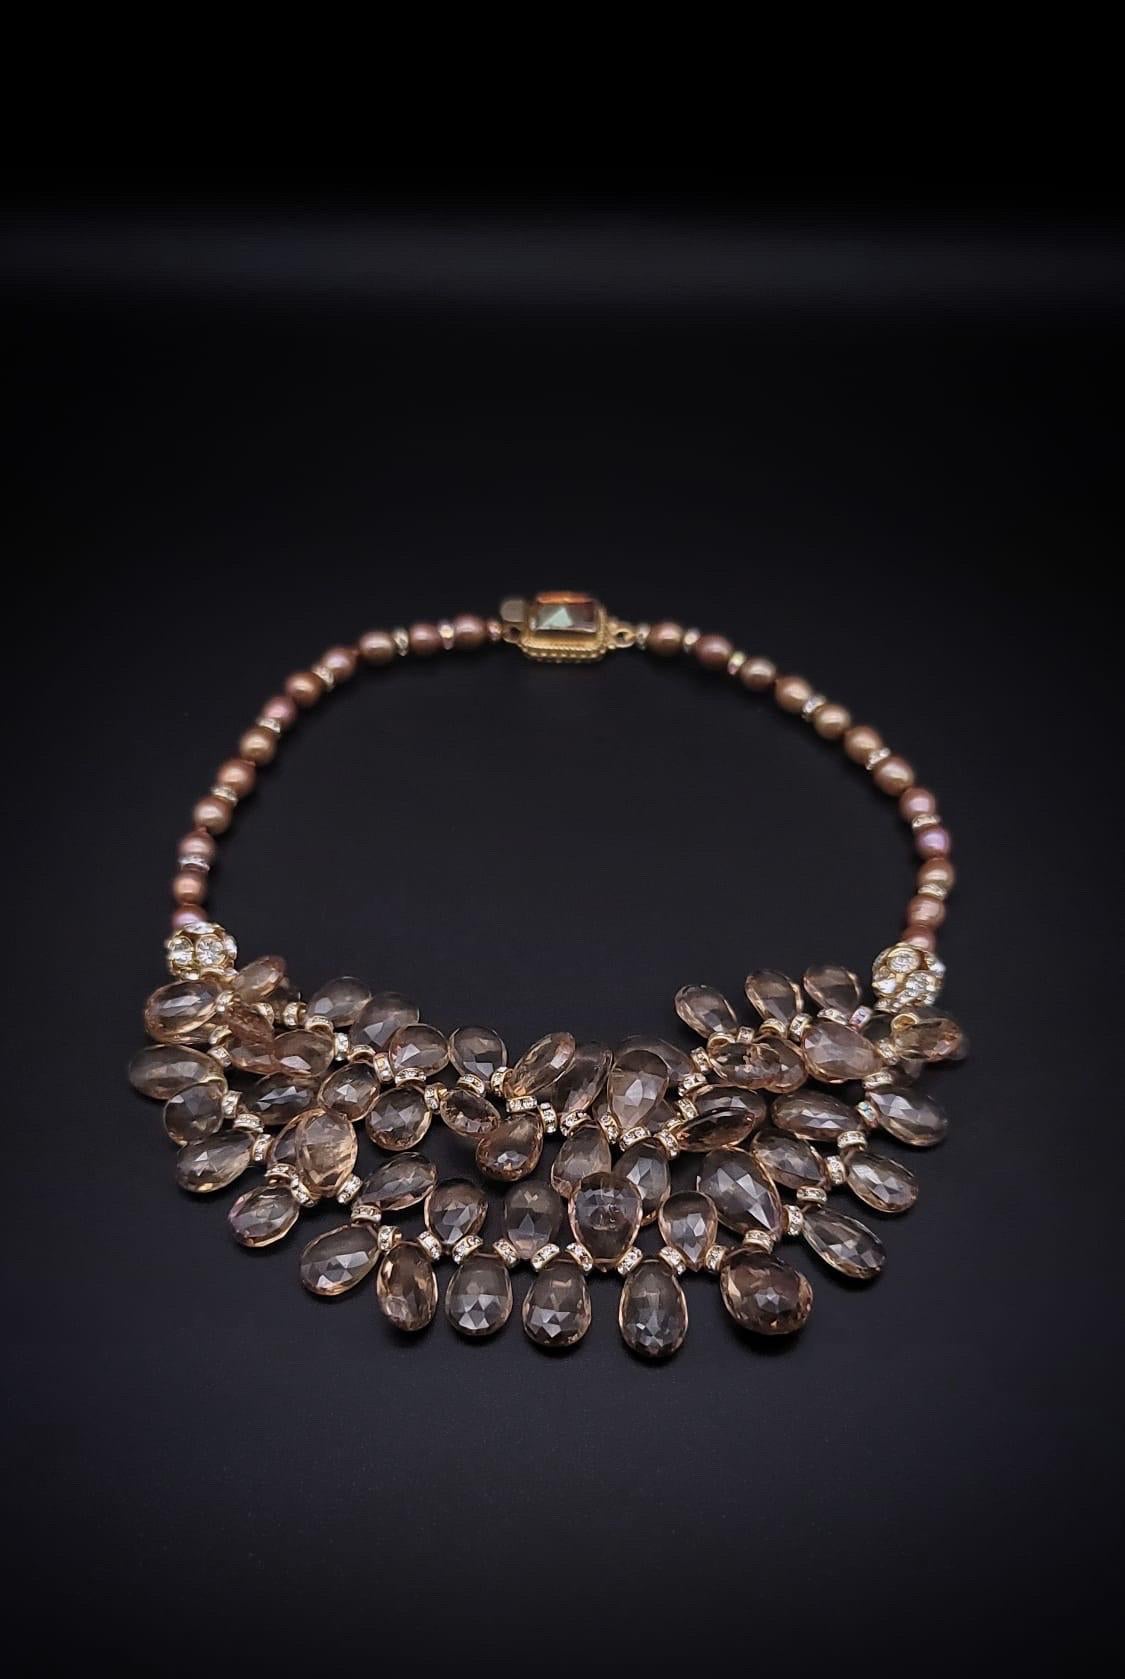 A.Jeschel A dramatic mix of faceted champagne quartz necklace For Sale 2